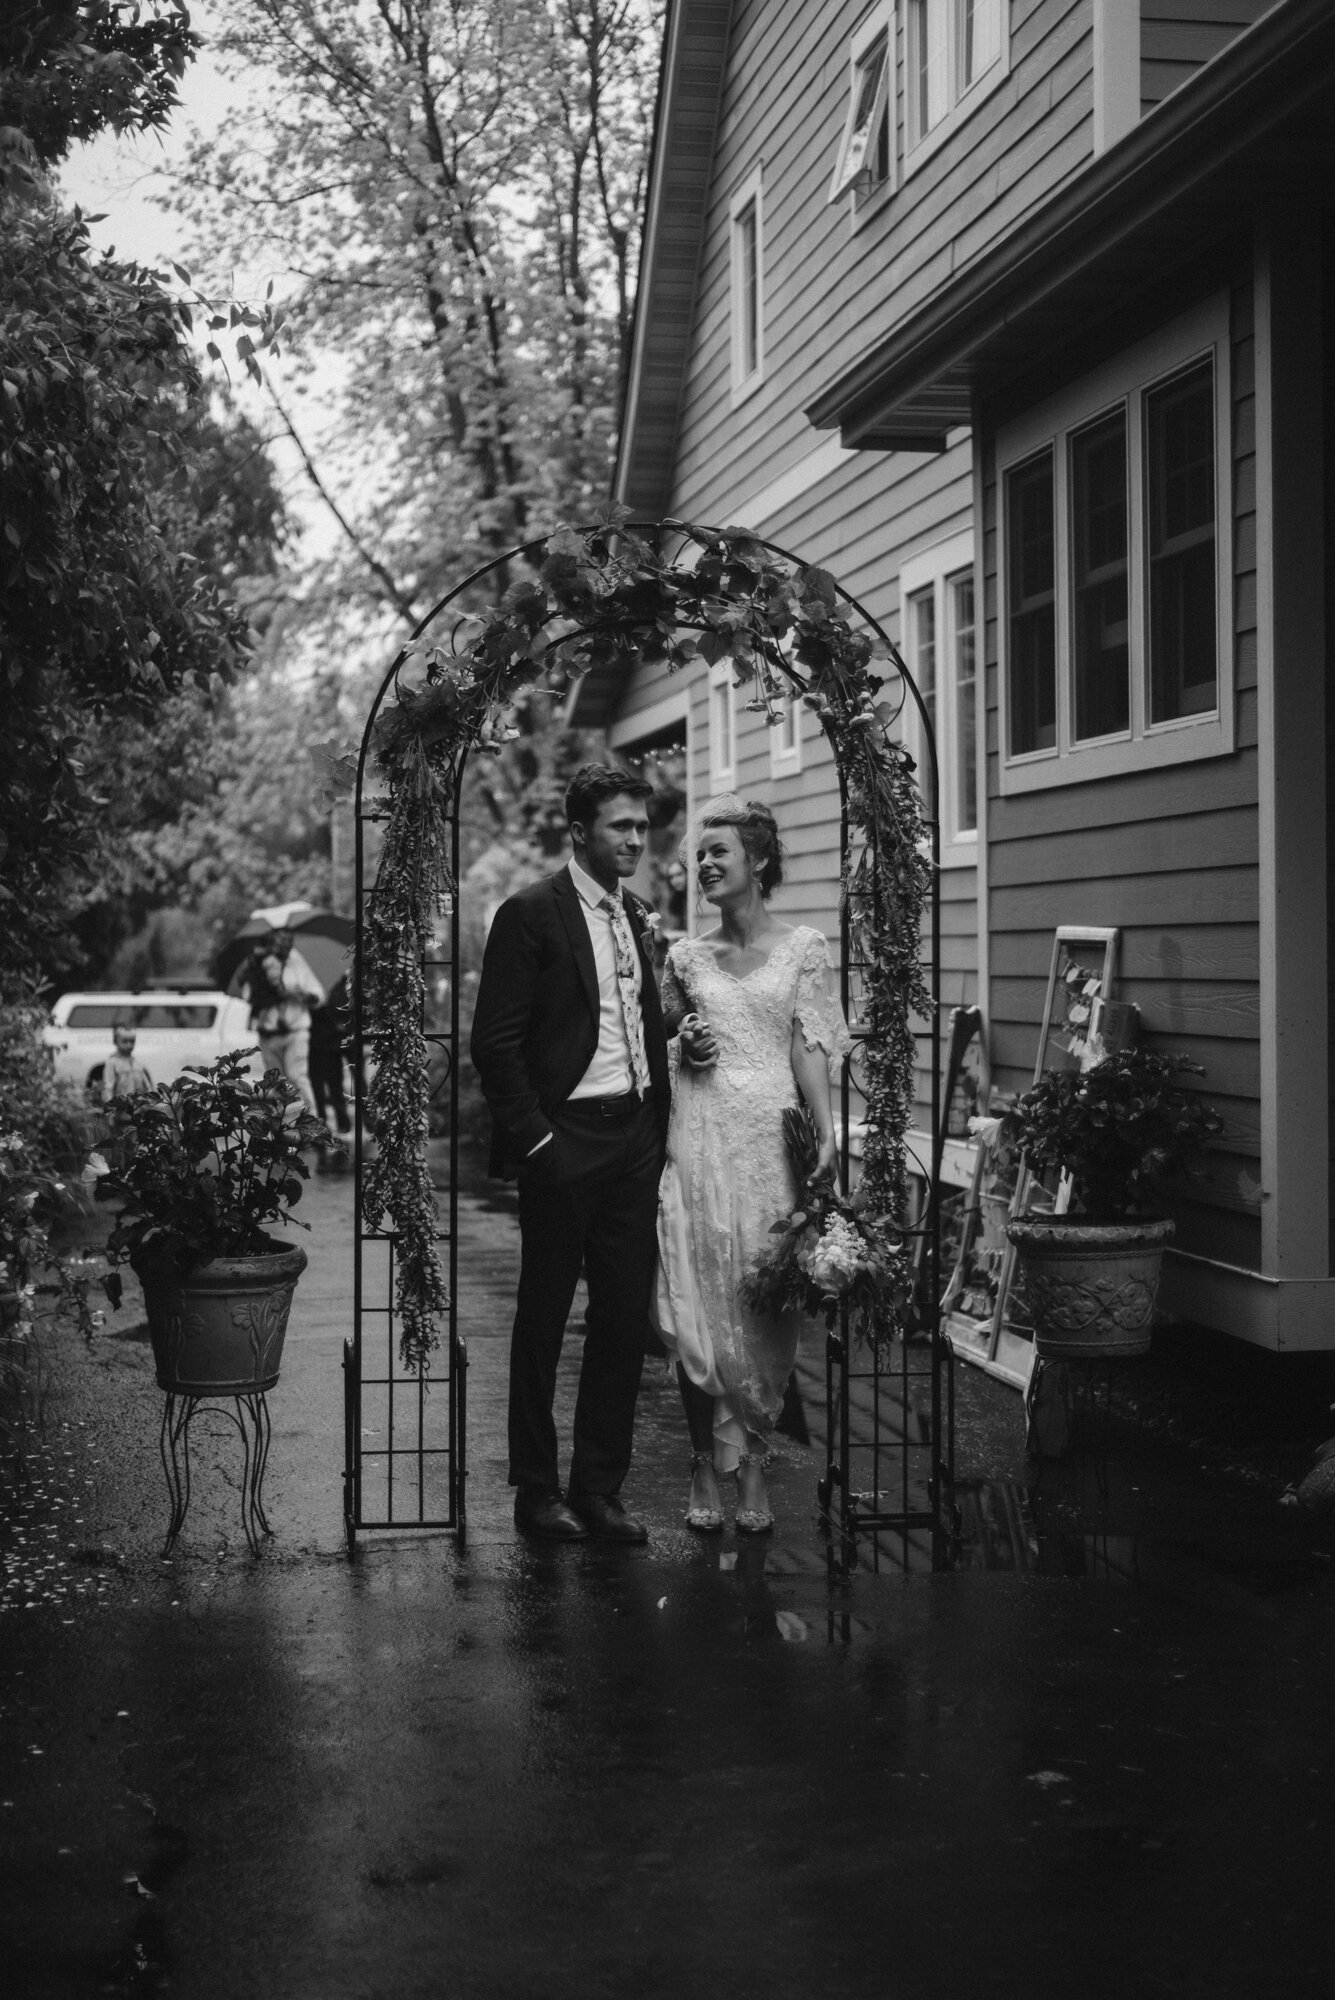 Mairi and Jude - Rainy Backyard Wedding - Intimate Wedding - Fun Reception Photos - Chicago Wedding Photographer - Catholic Wedding - White Sails Creative - Virginia Backyard Wedding Photographer_15.jpg